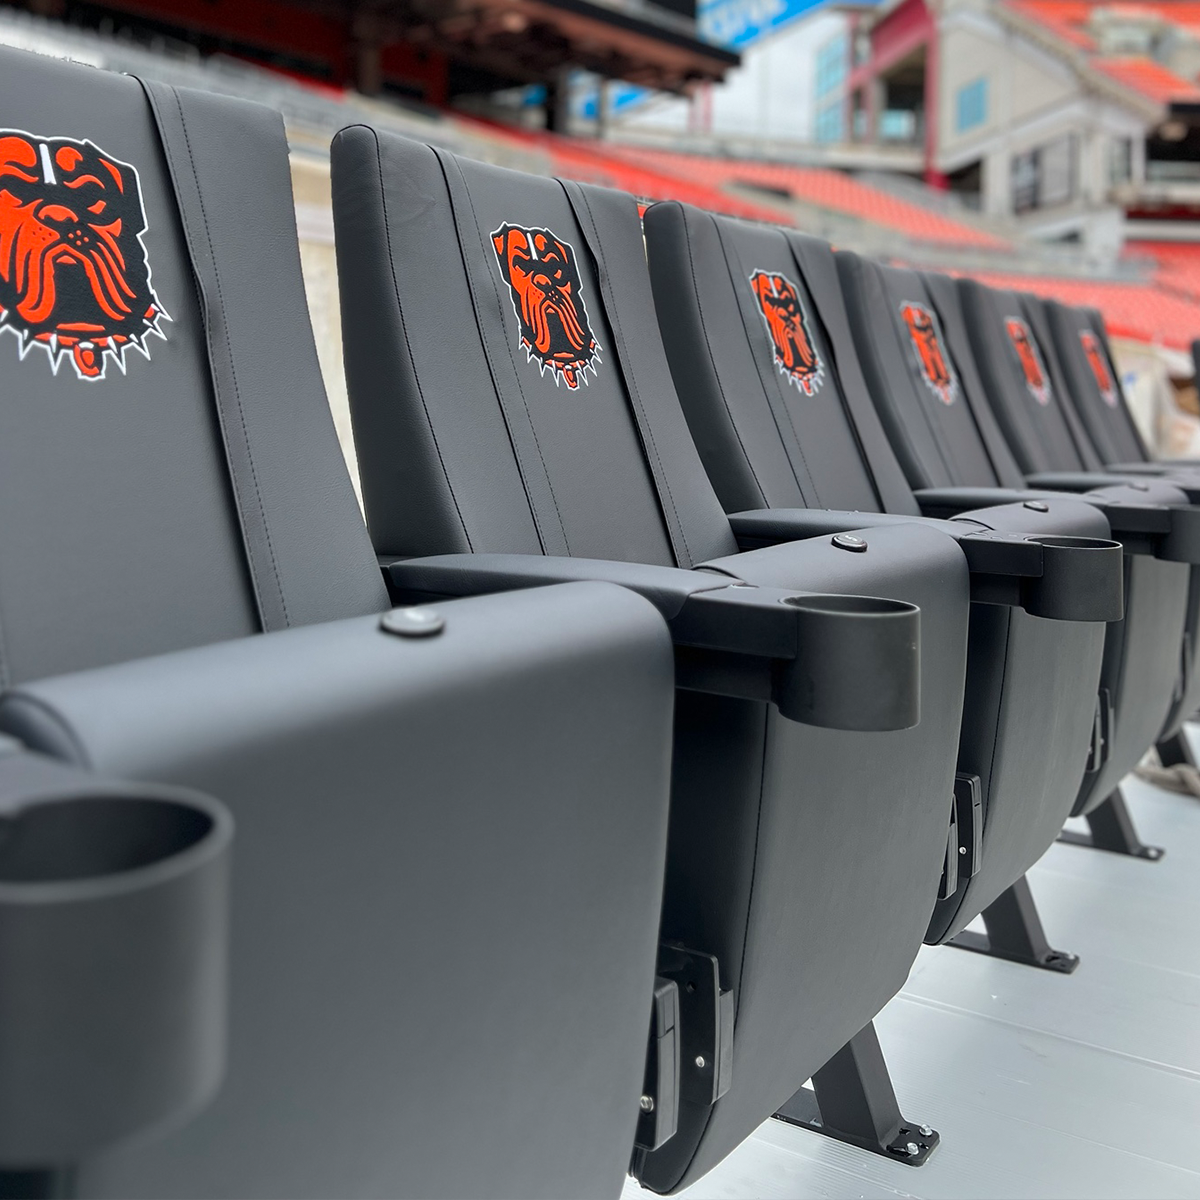 SuiteMax 3.5 VIP Seats with Houston Rockets Team Commemorative Logo